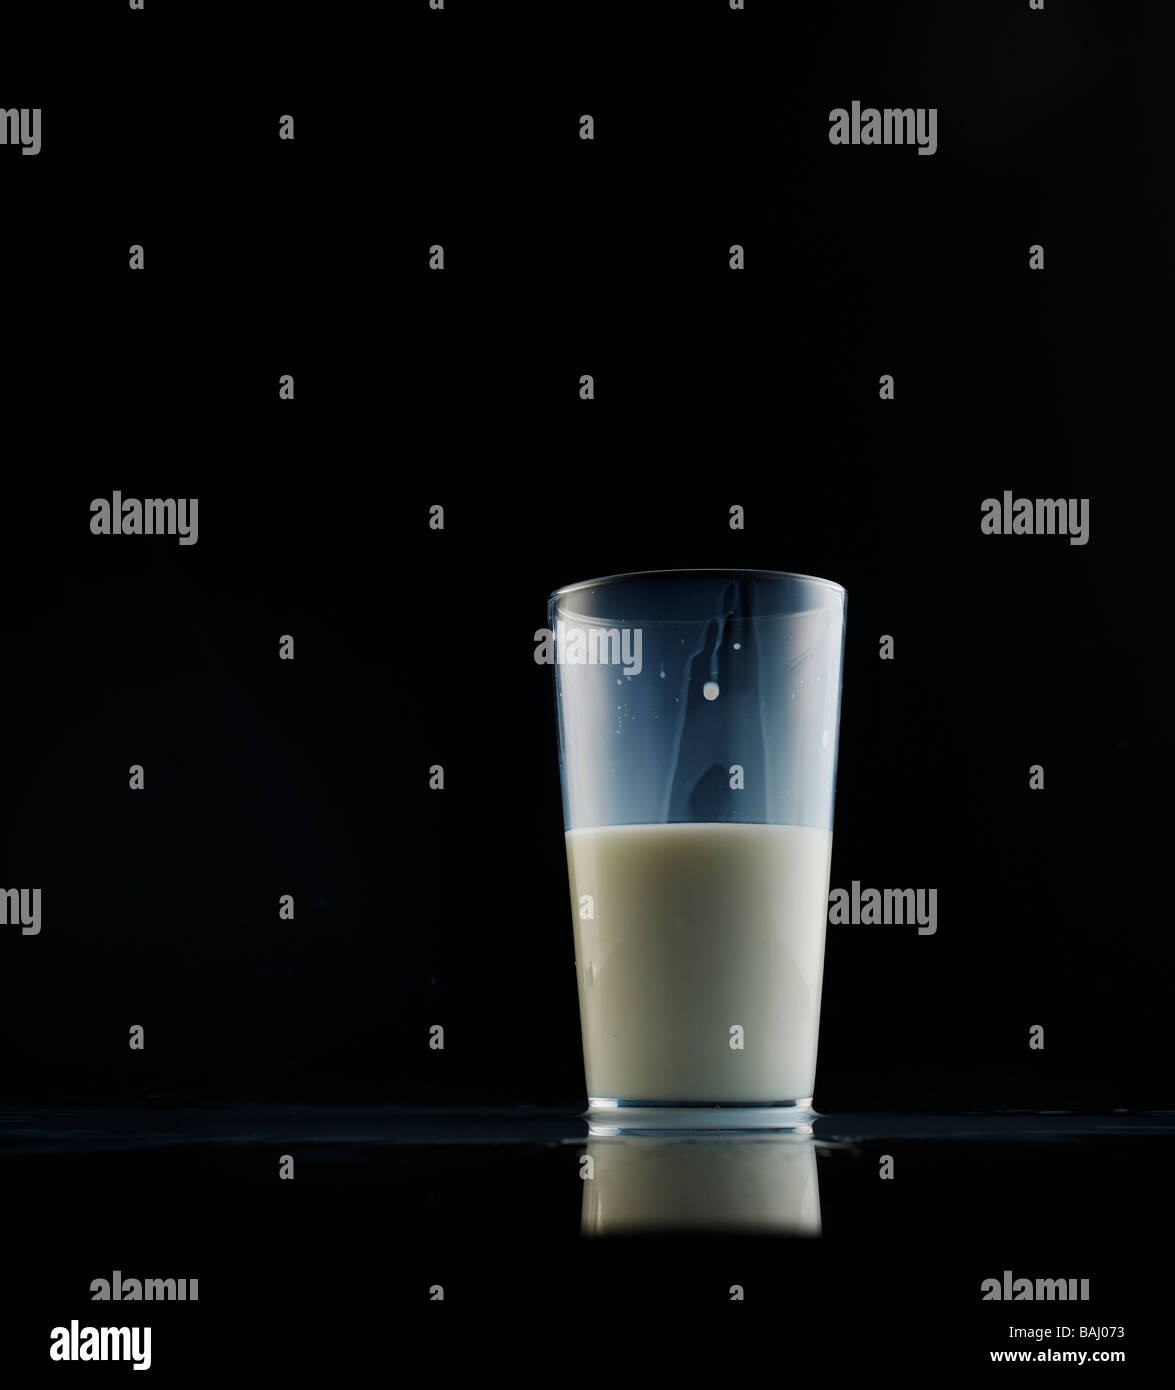 https://c8.alamy.com/comp/BAJ073/glass-of-milk-half-full-on-a-black-reflective-background-BAJ073.jpg